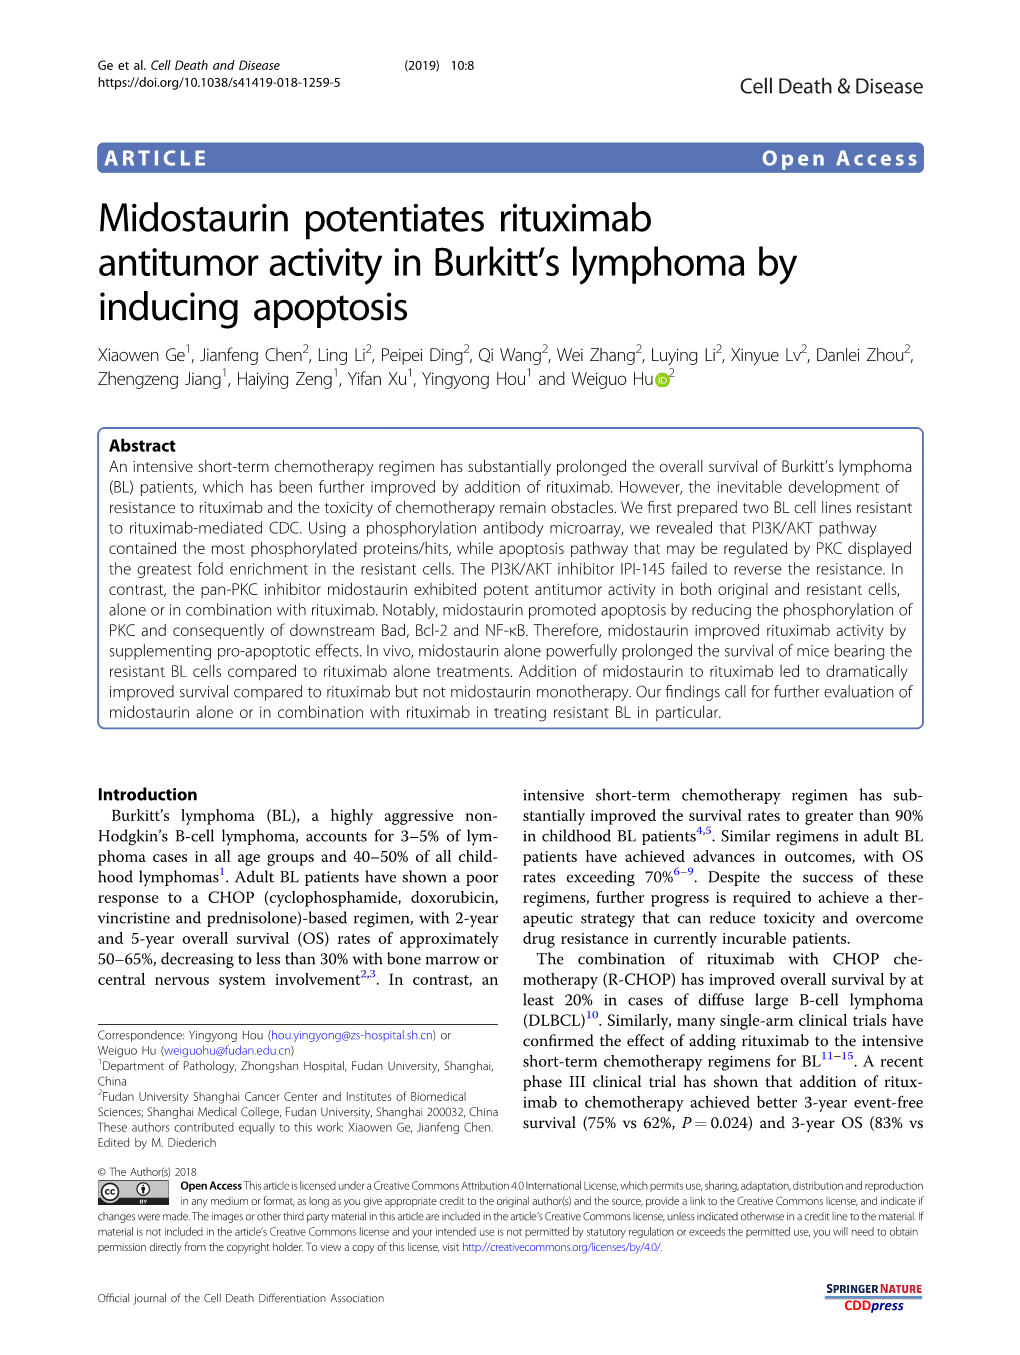 Midostaurin Potentiates Rituximab Antitumor Activity in Burkittâ€™S